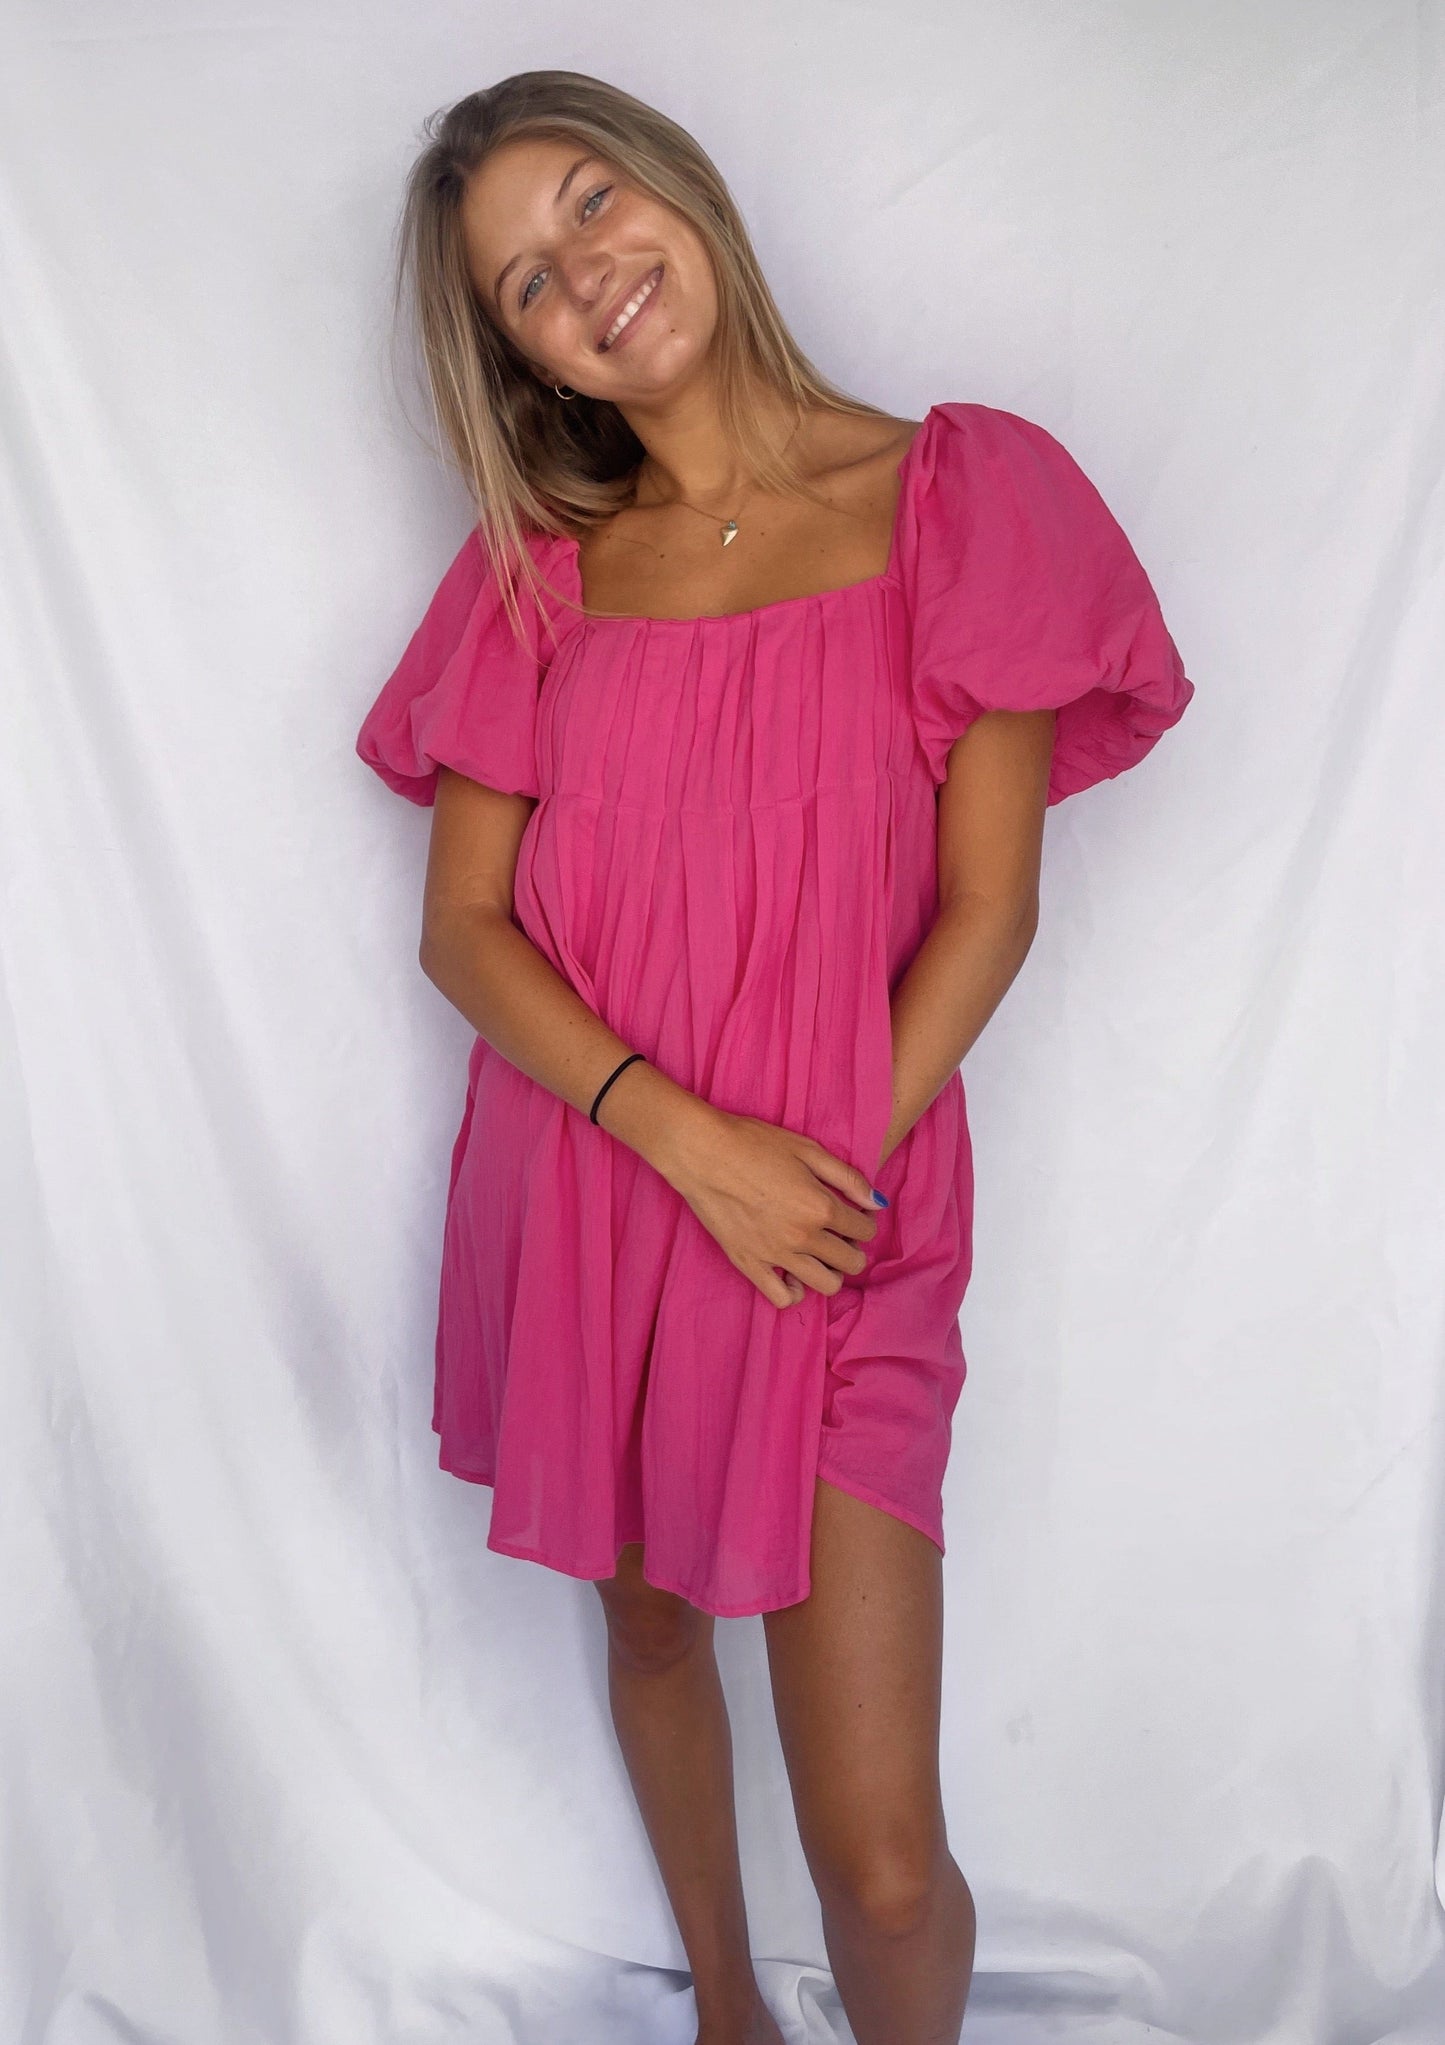 Call It A Crush Pink Dress